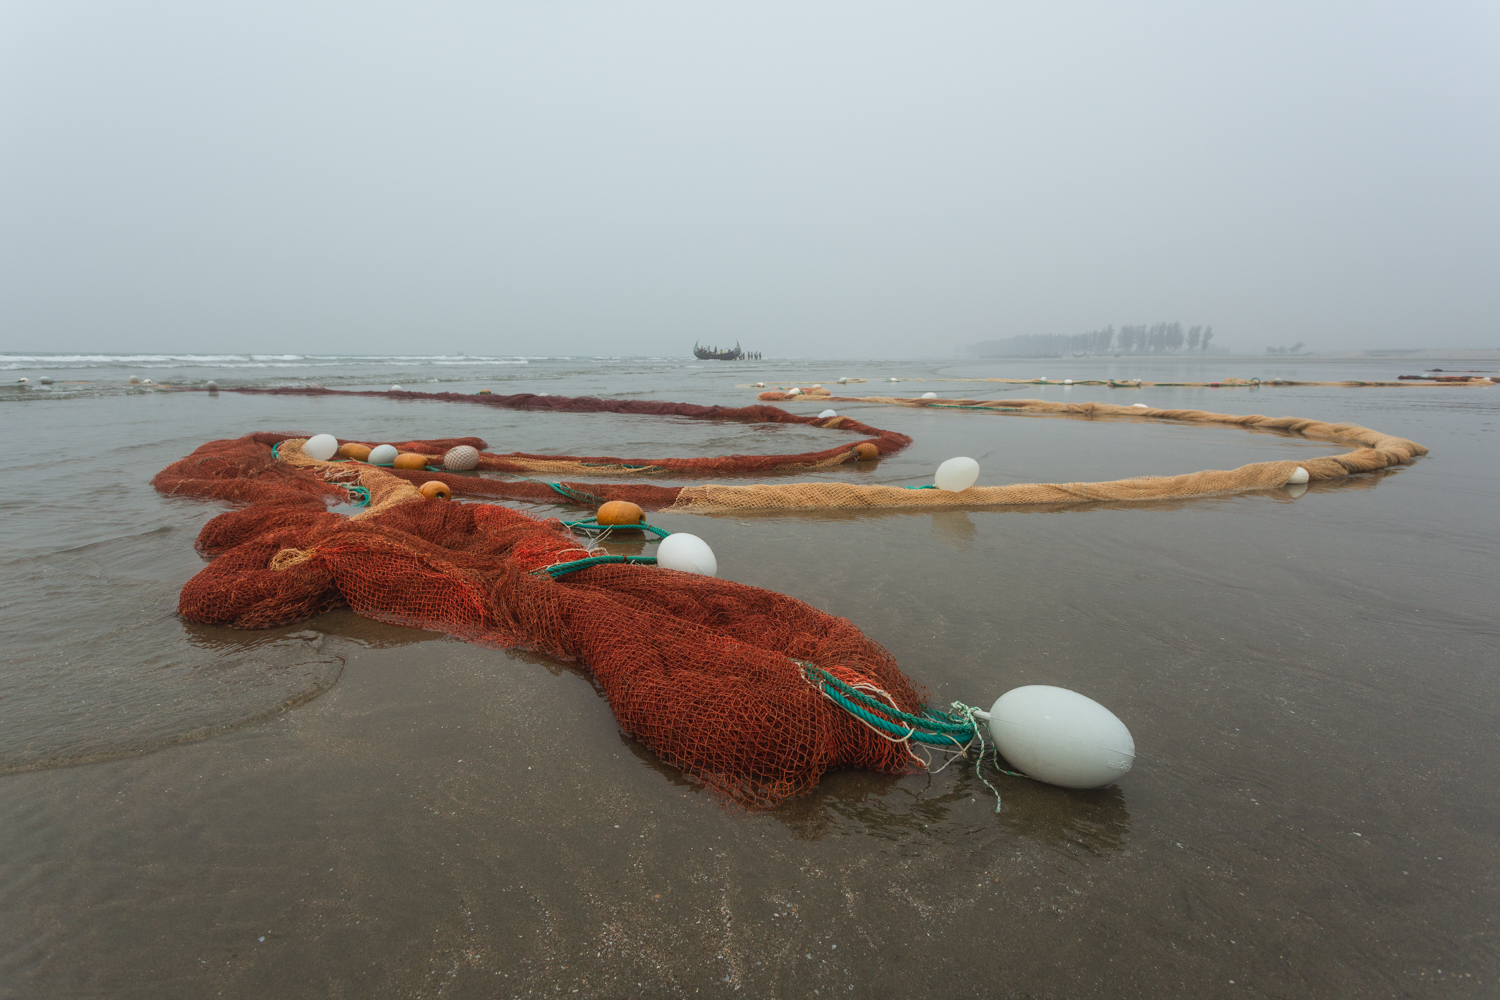 Guiding the fishing nets at the Bay of Bengal, Cox’s Bazar Bangladesh